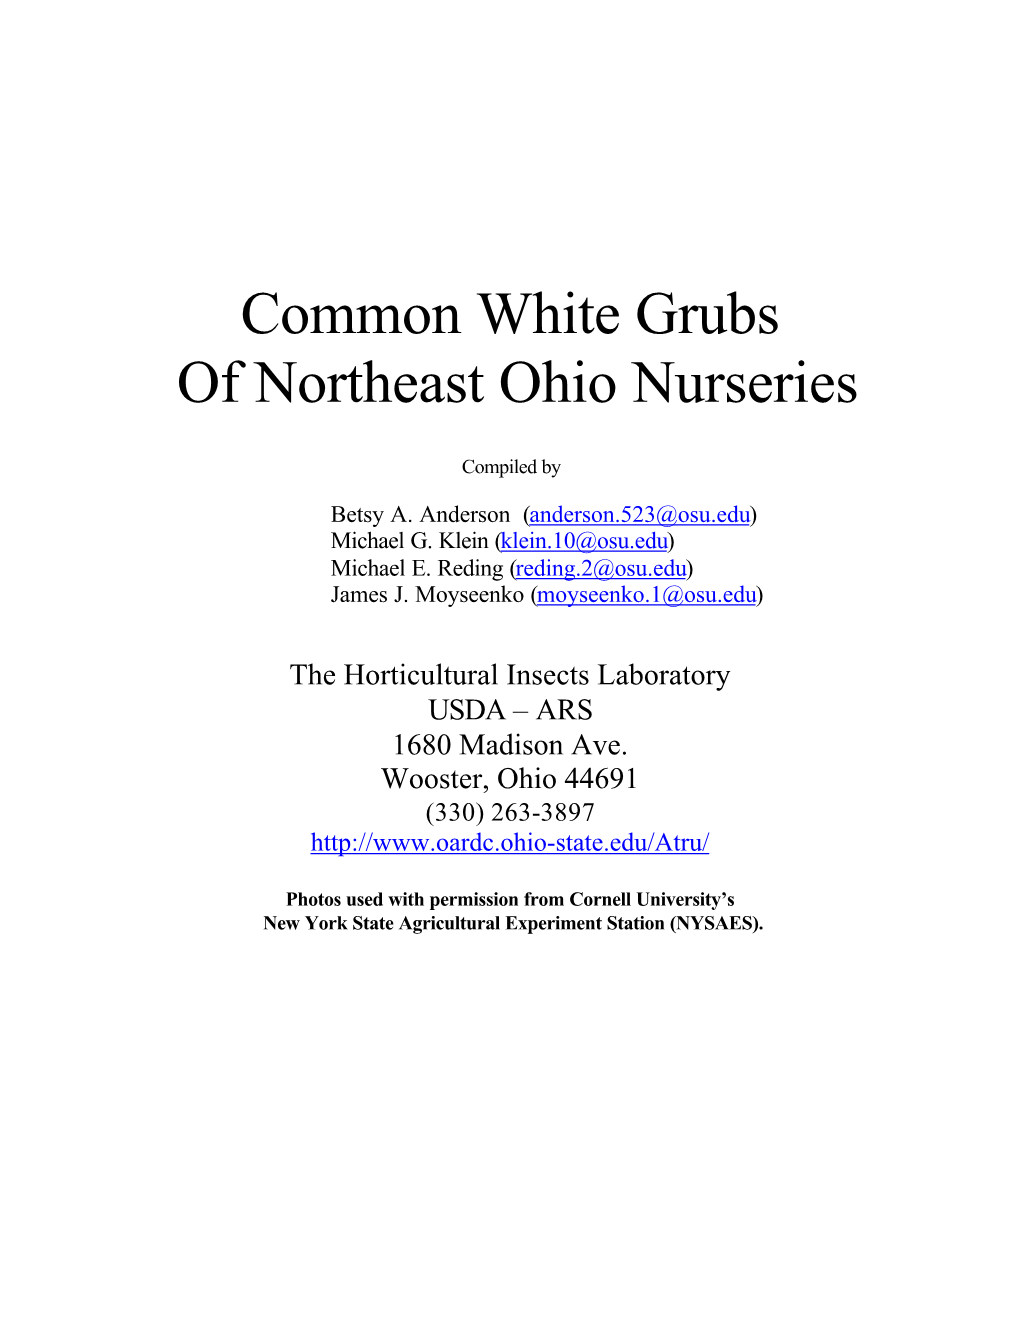 Common White Grubs of Northeast Ohio Nurseries